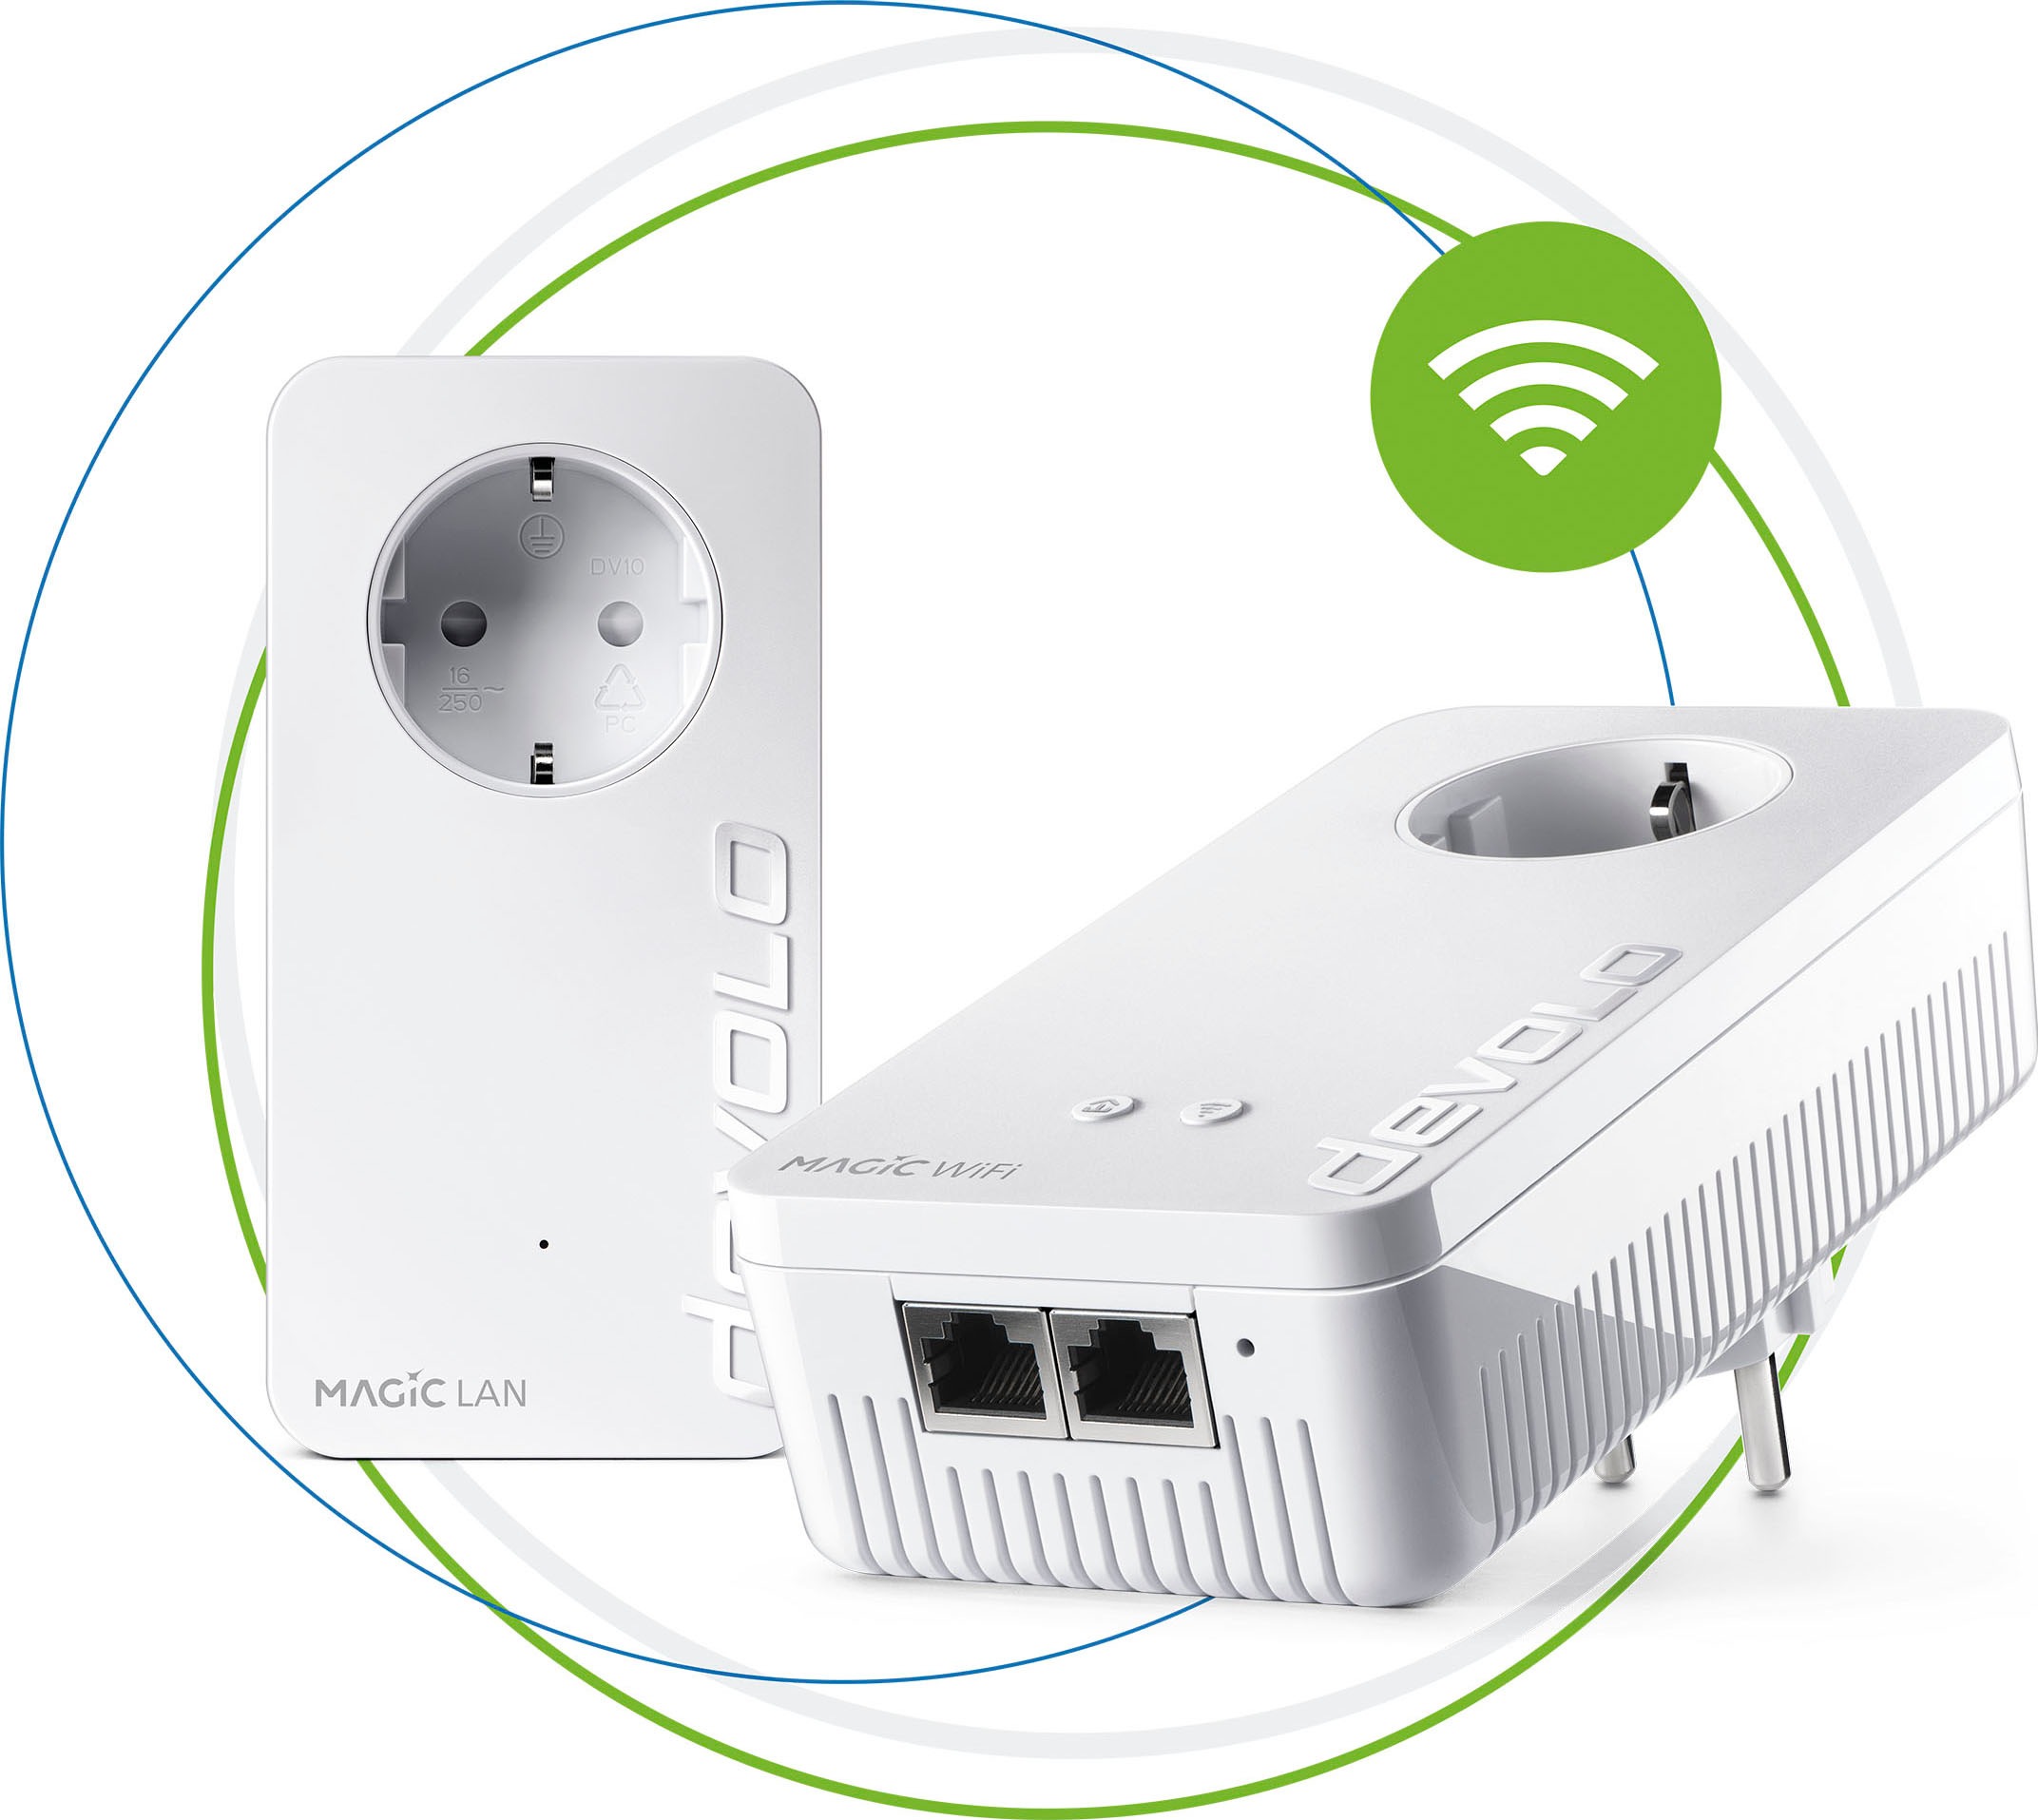 DEVOLO Netzwerk-Adapter »Magic 2 WiFi ac Next Starterkit (2400Mbit, 3x LAN, Mesh)«